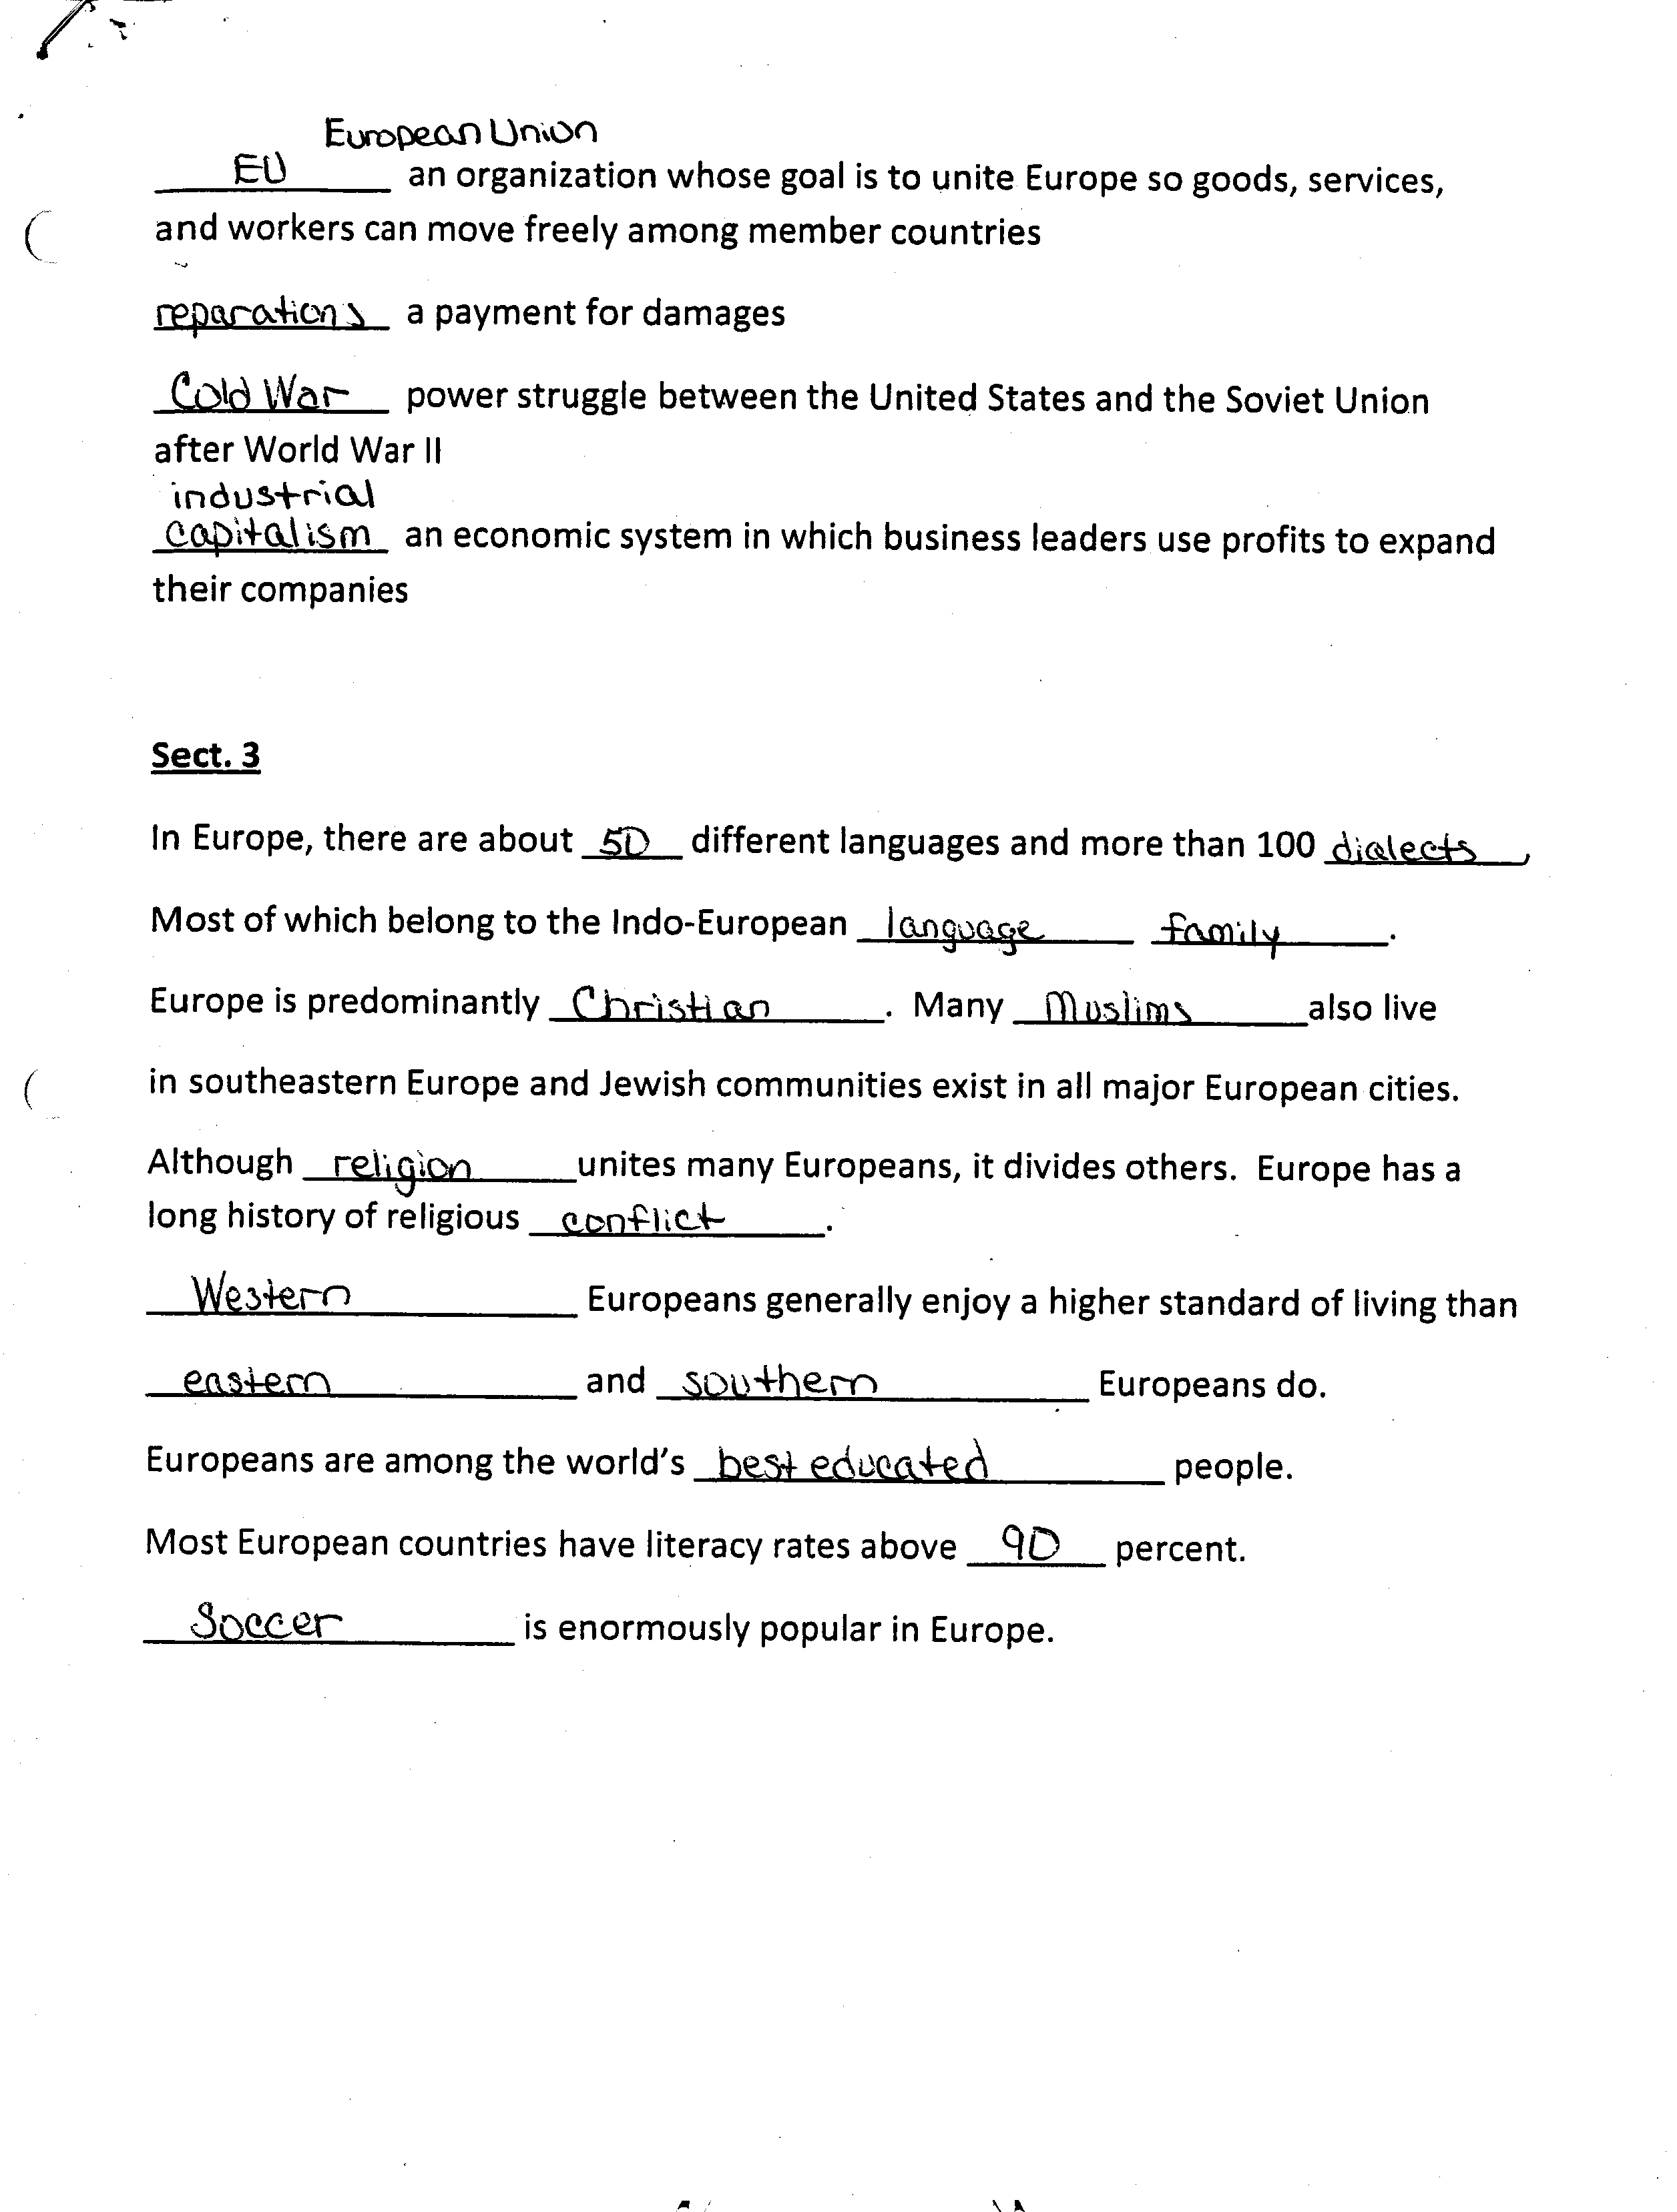 cold war vocabulary worksheet answer key